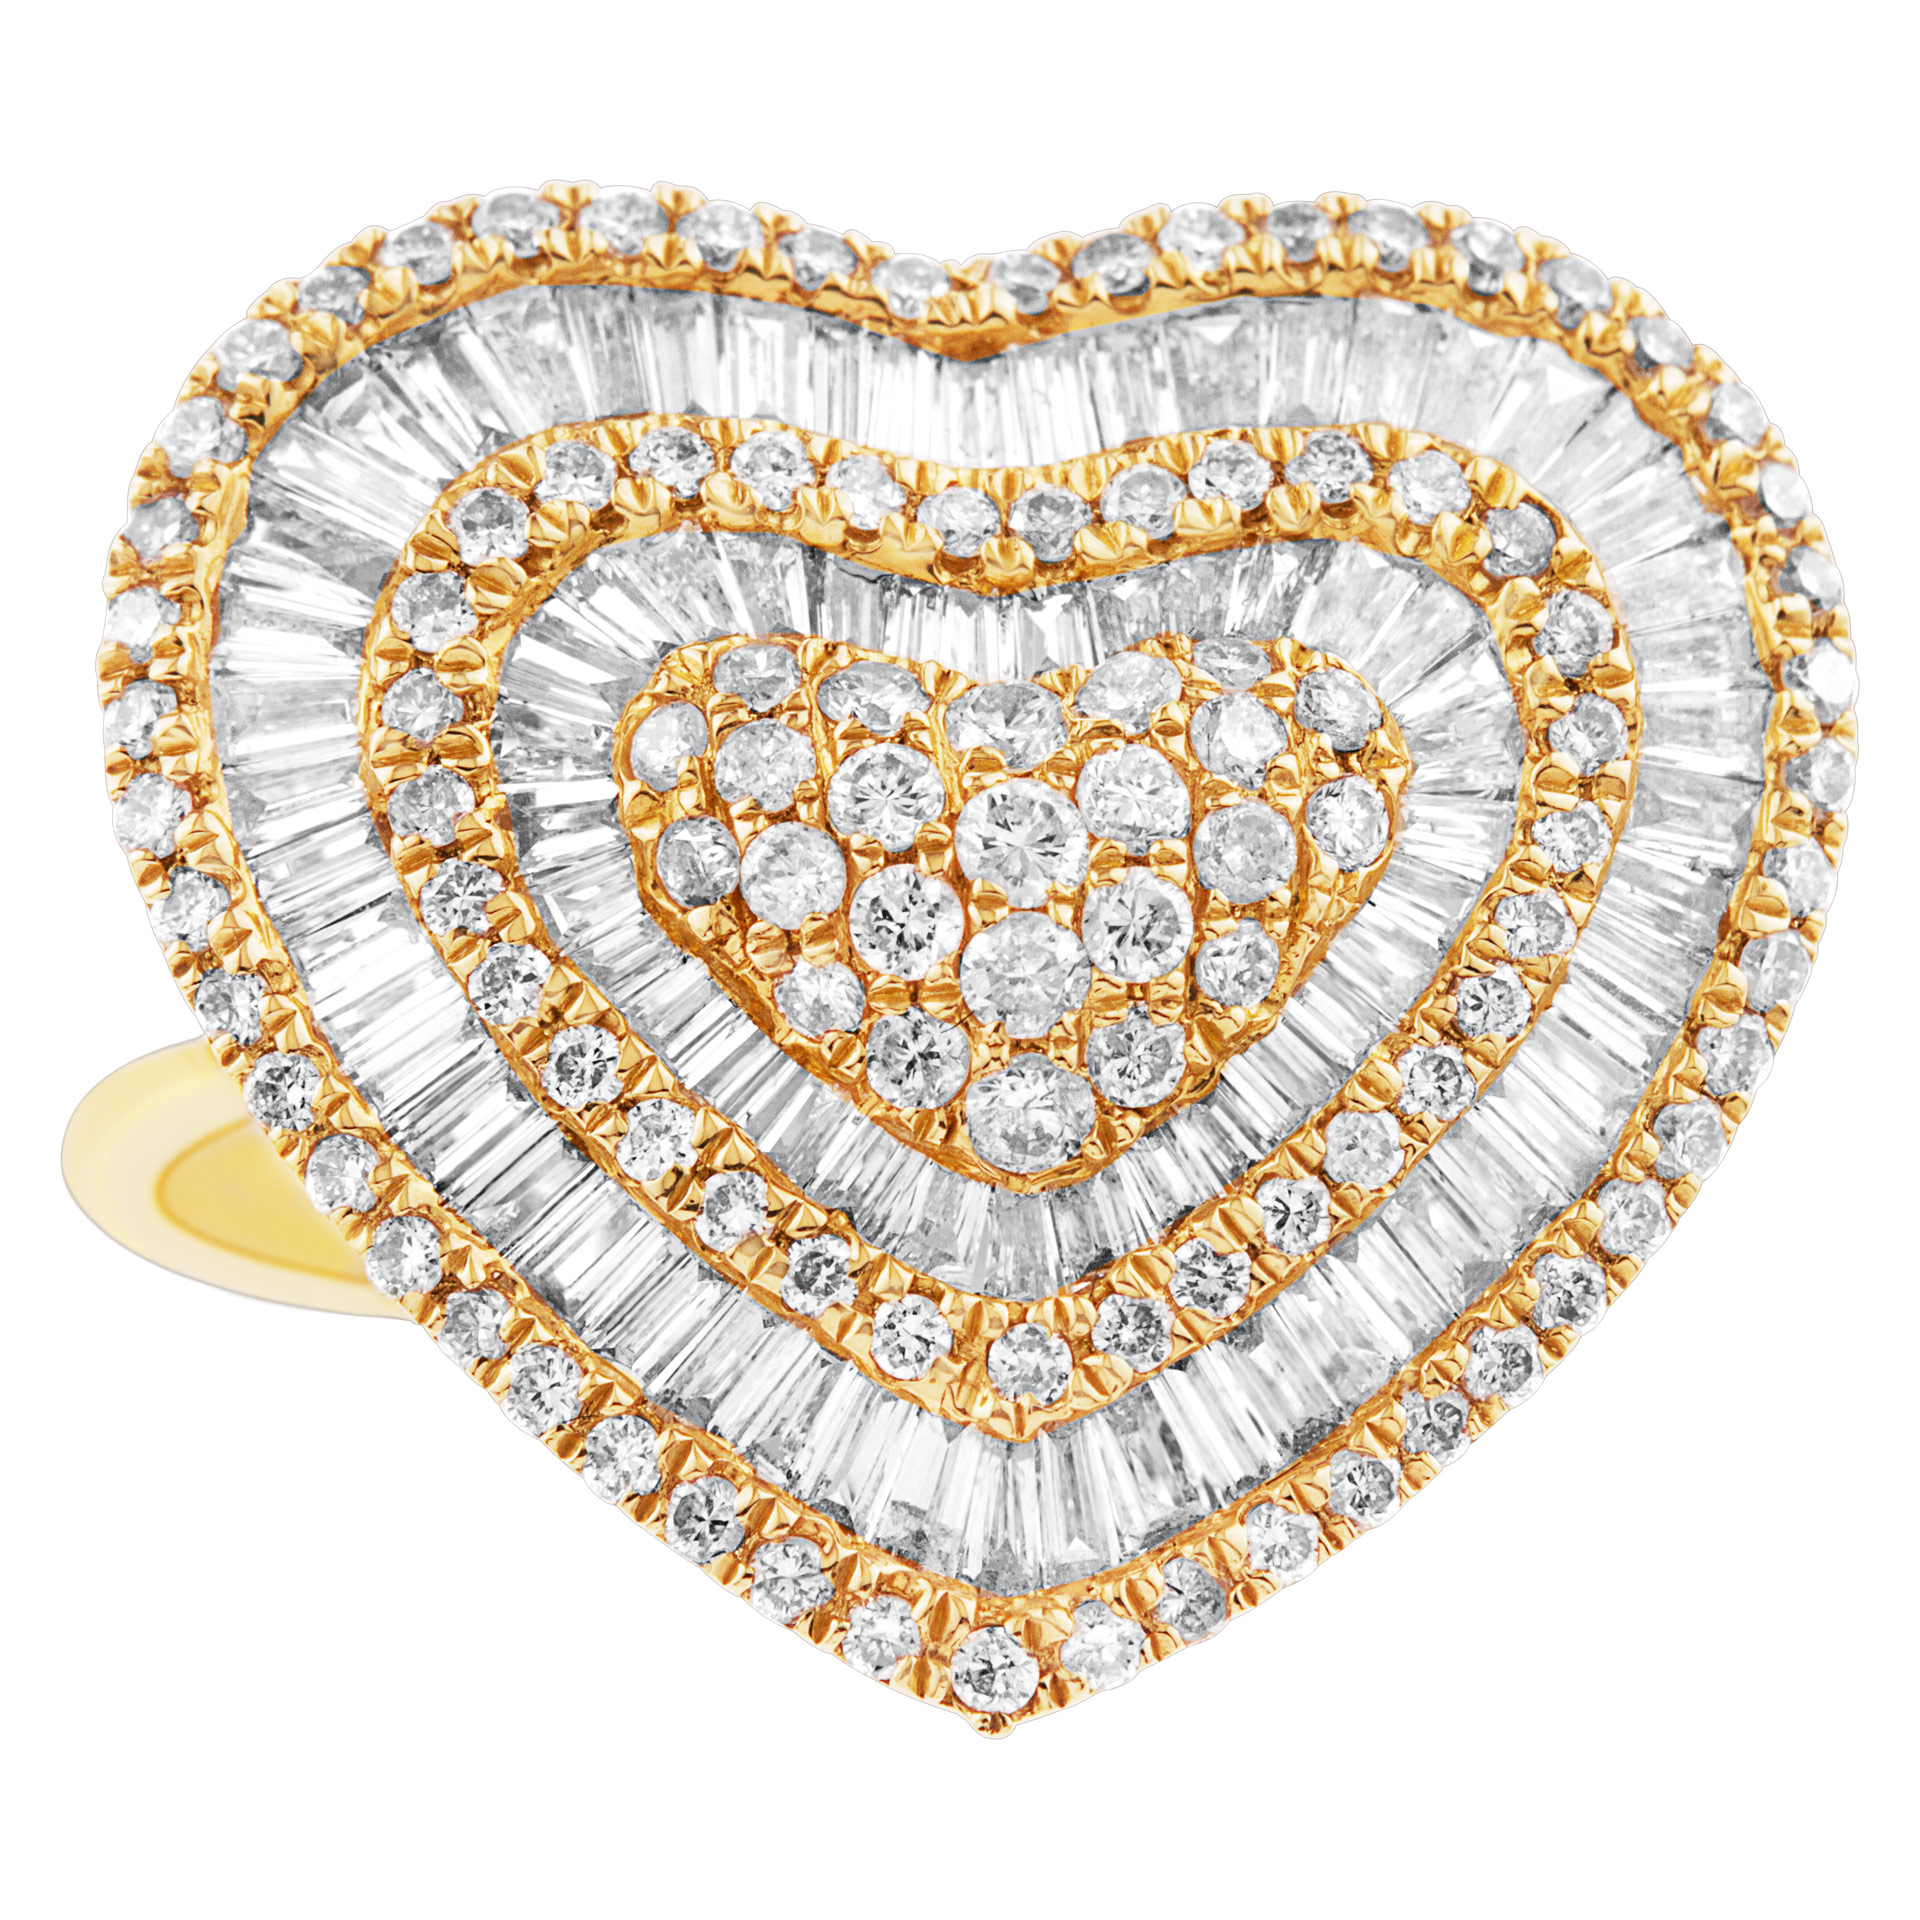 Diamond heart ring in 18K